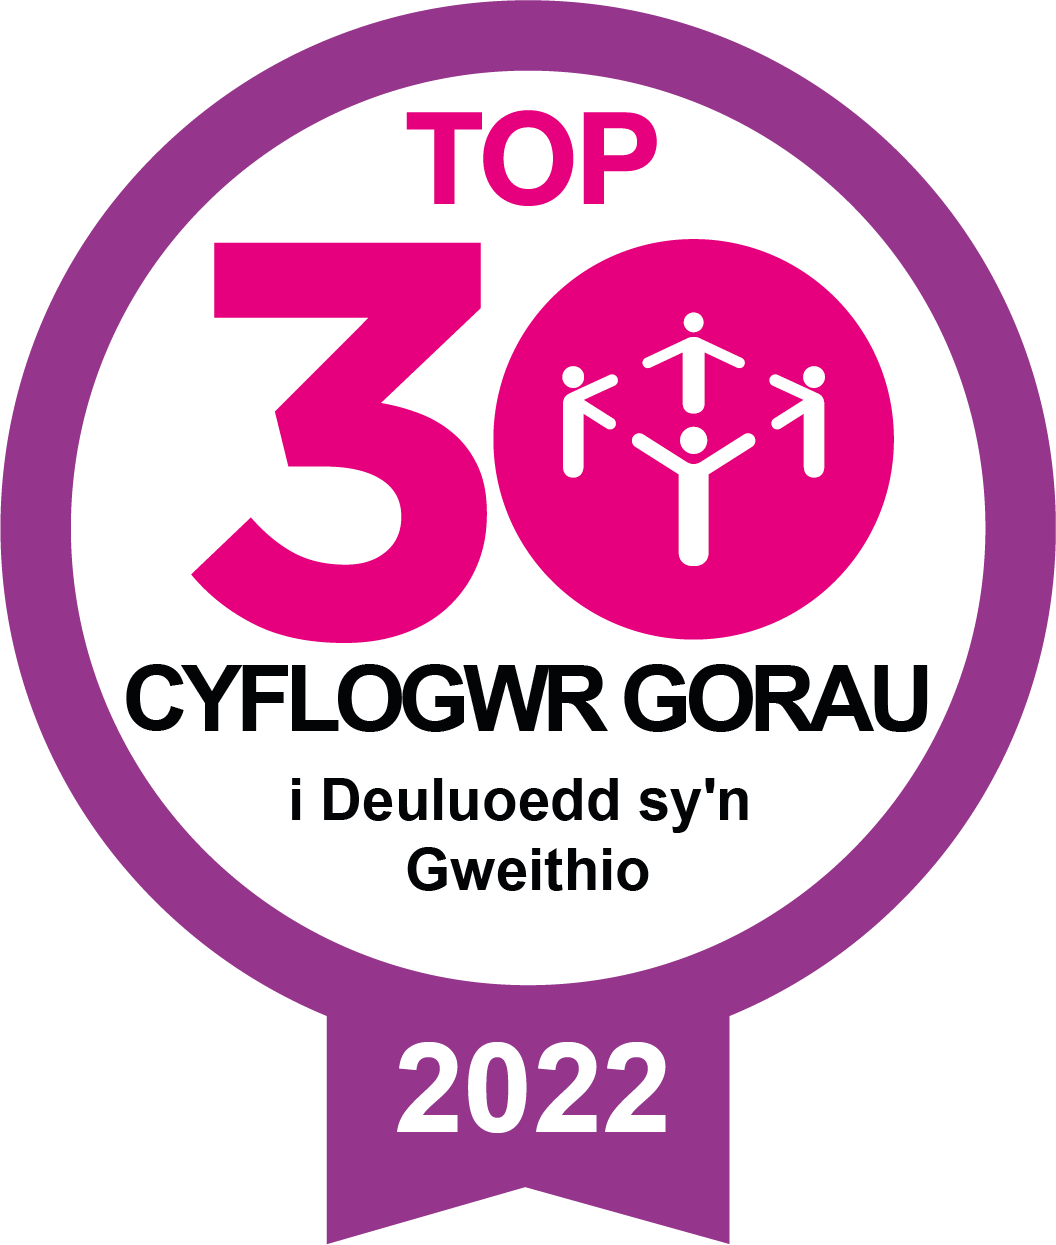 Top Employer logo 2022 in Welsh